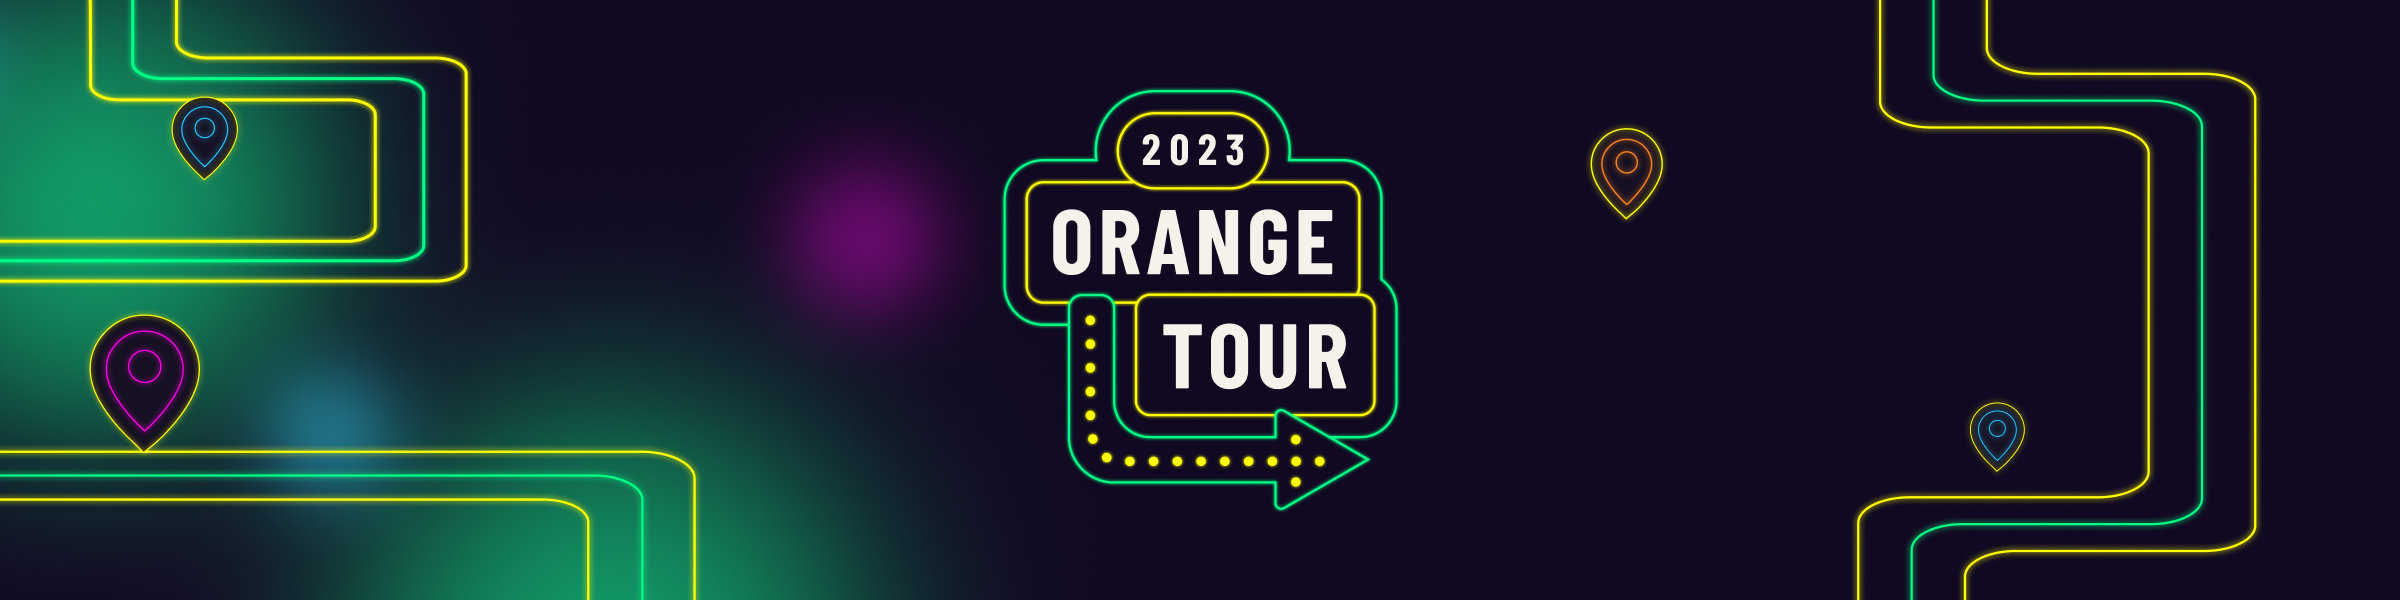 Orange Tour 2023